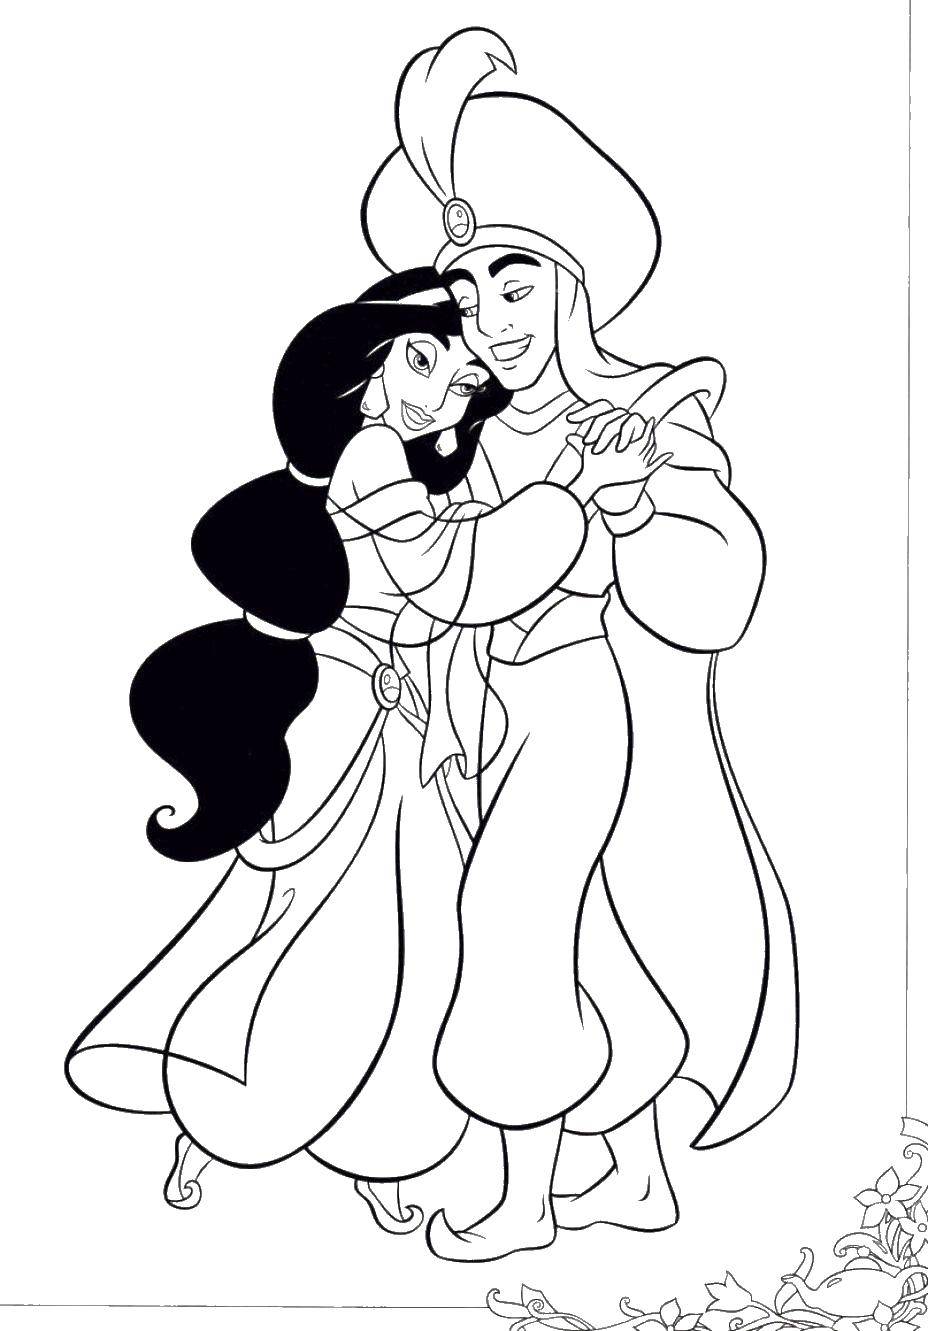 Coloring Jasmine and Alladin. Category Princess. Tags:  Aladdin, Jasmine, Princess, Prince.